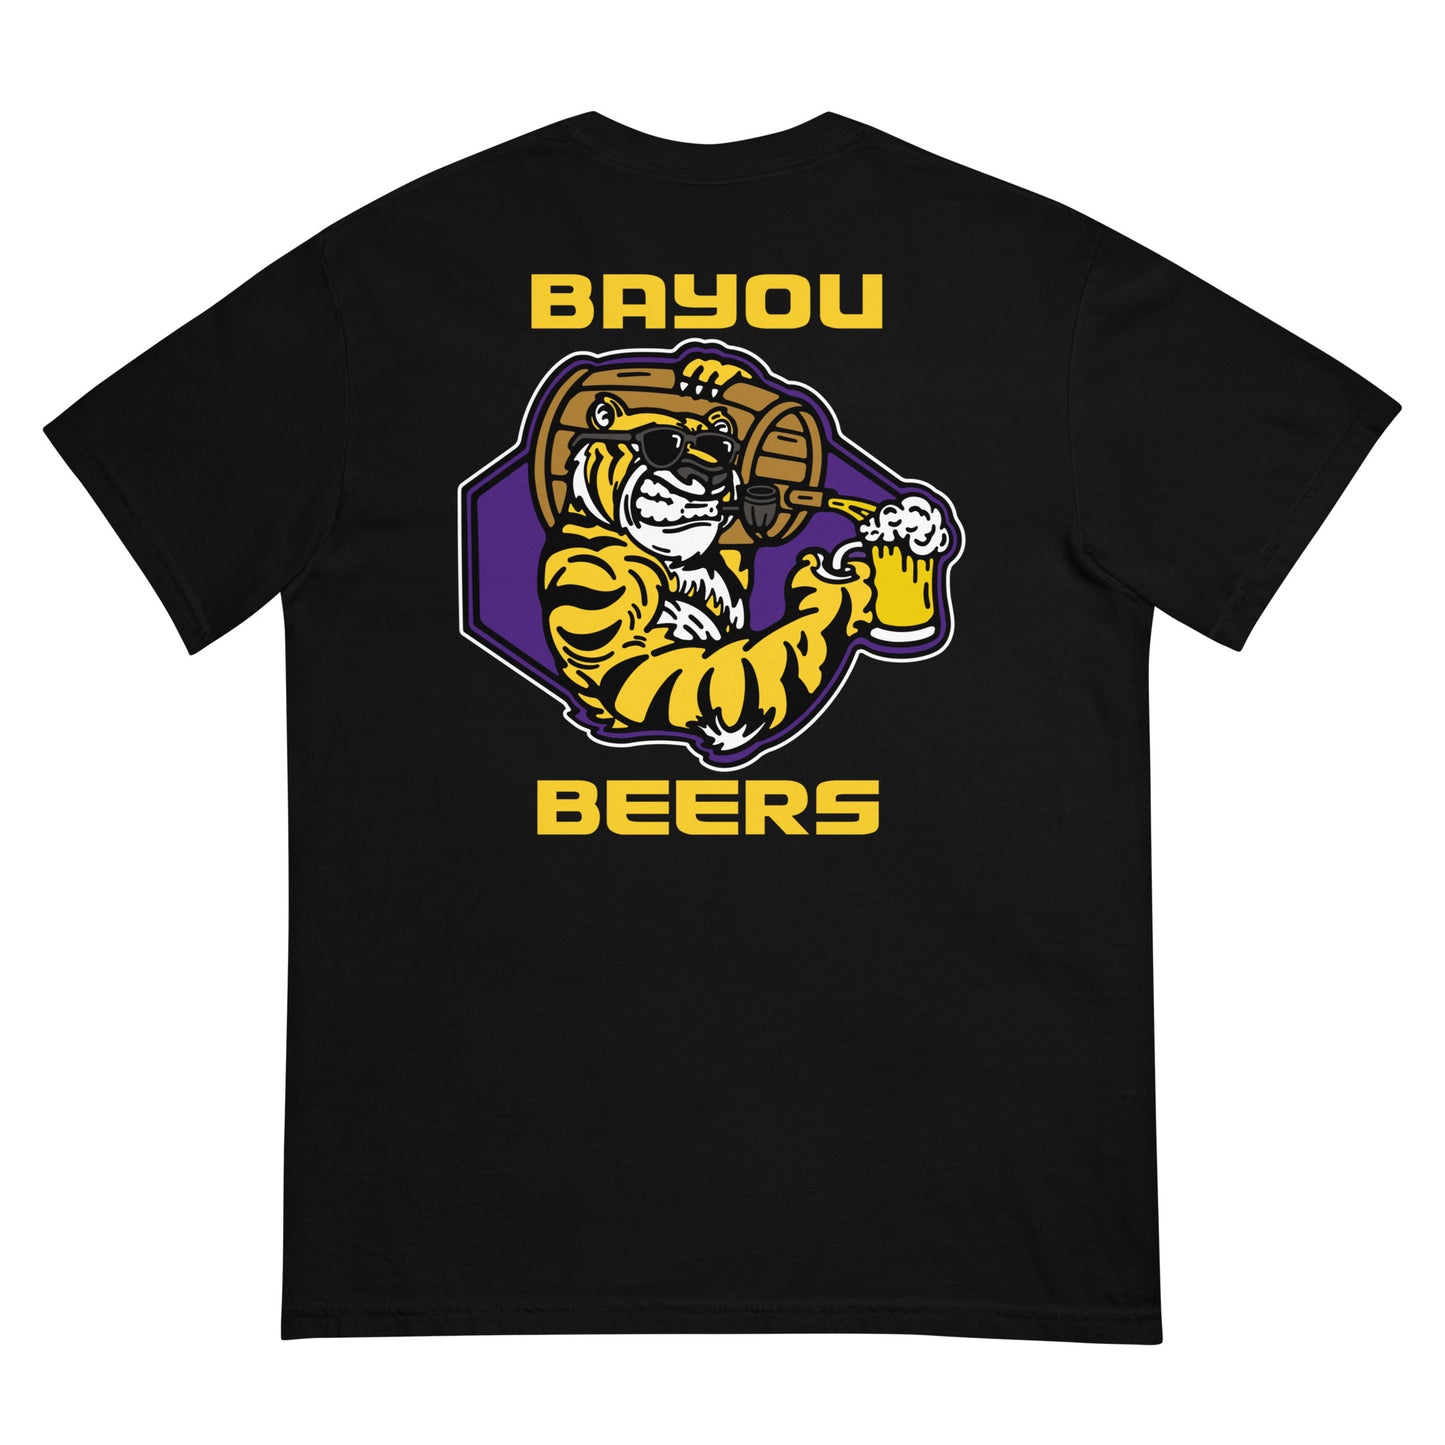 Bayou Beers (Gold)